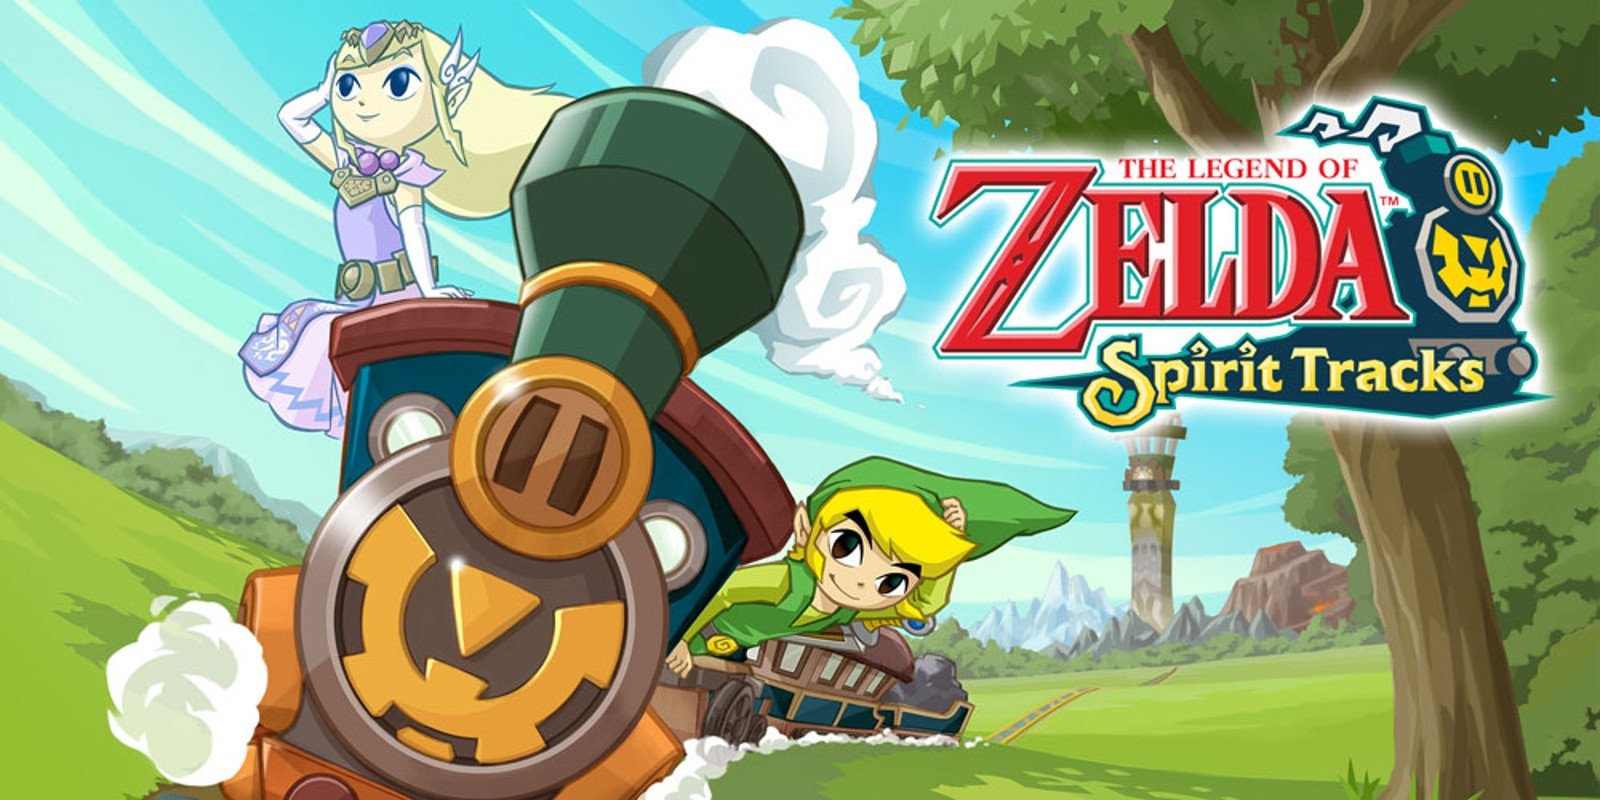 The Legend of Zelda: Spirit Tracks. Nintendo